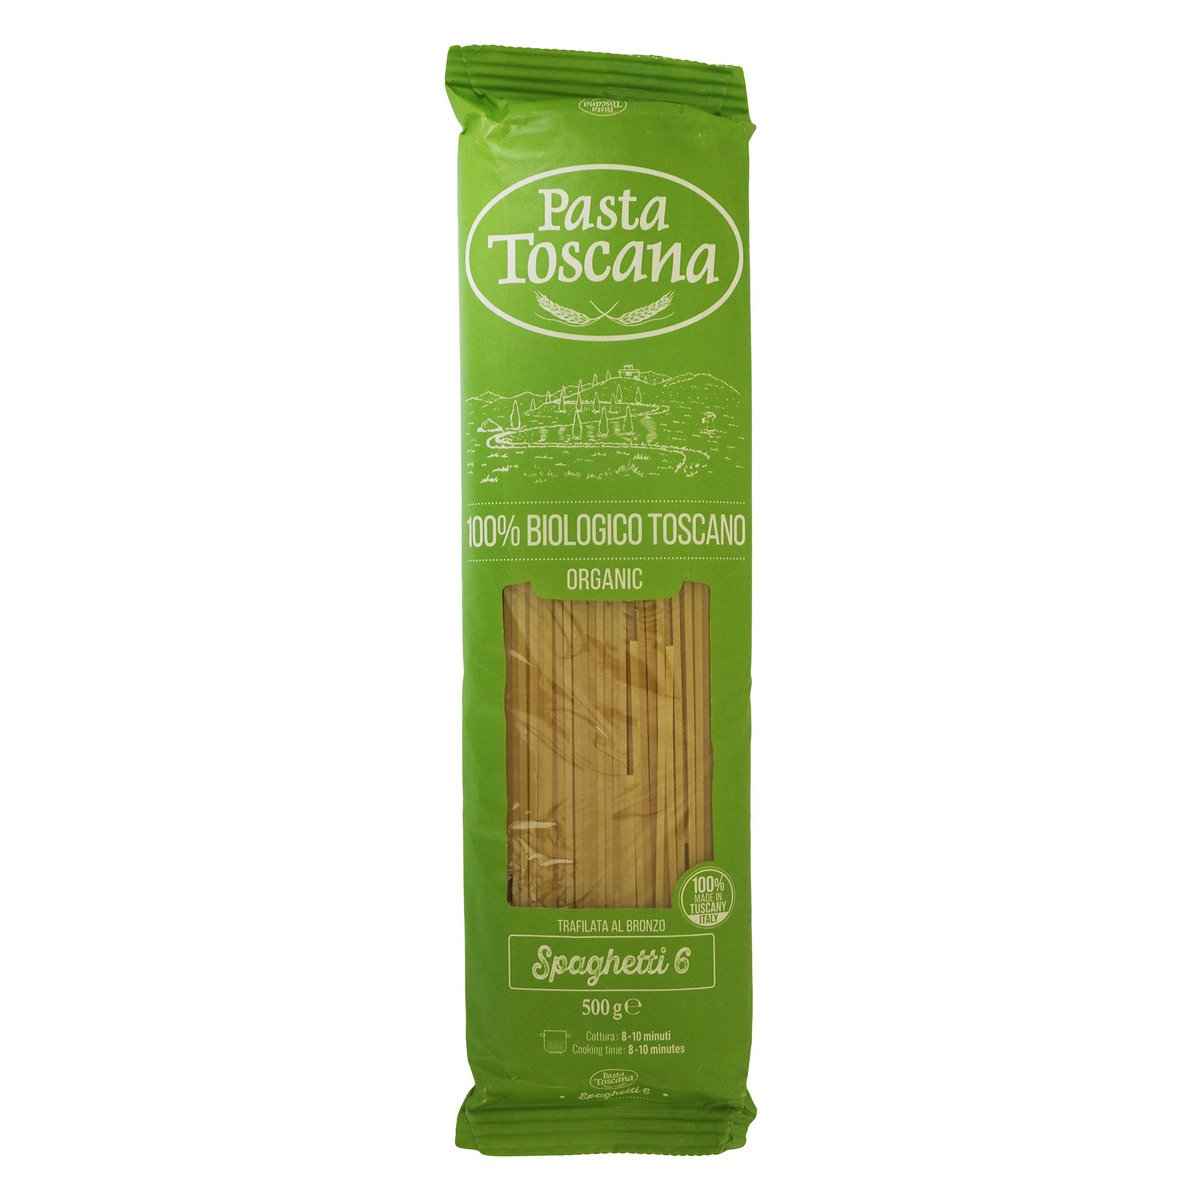 Pasta Toscana Organic Spaghetti 6 500g